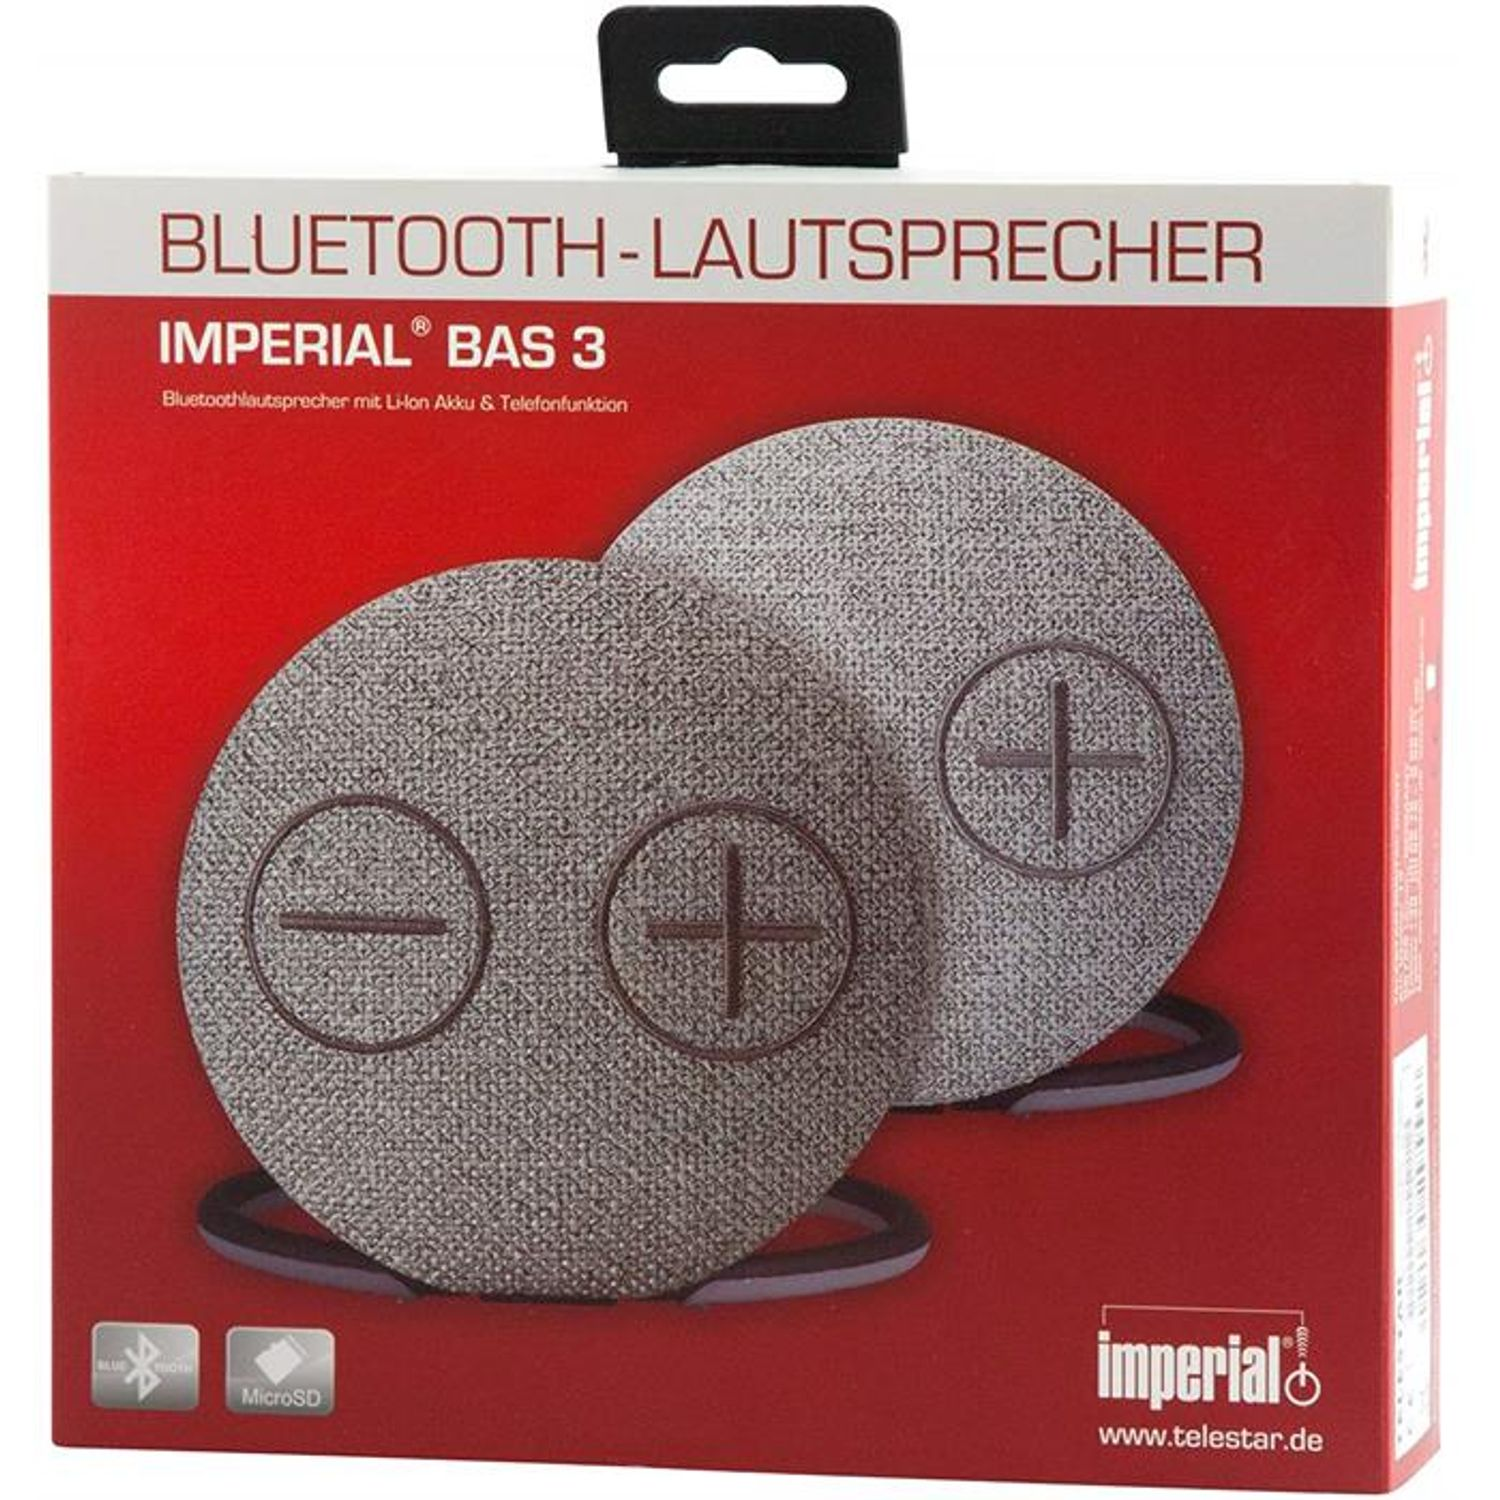 IMPERIAL BAS 3 Bluetooth-Lautsprecher, dunkelgrau/schwarz